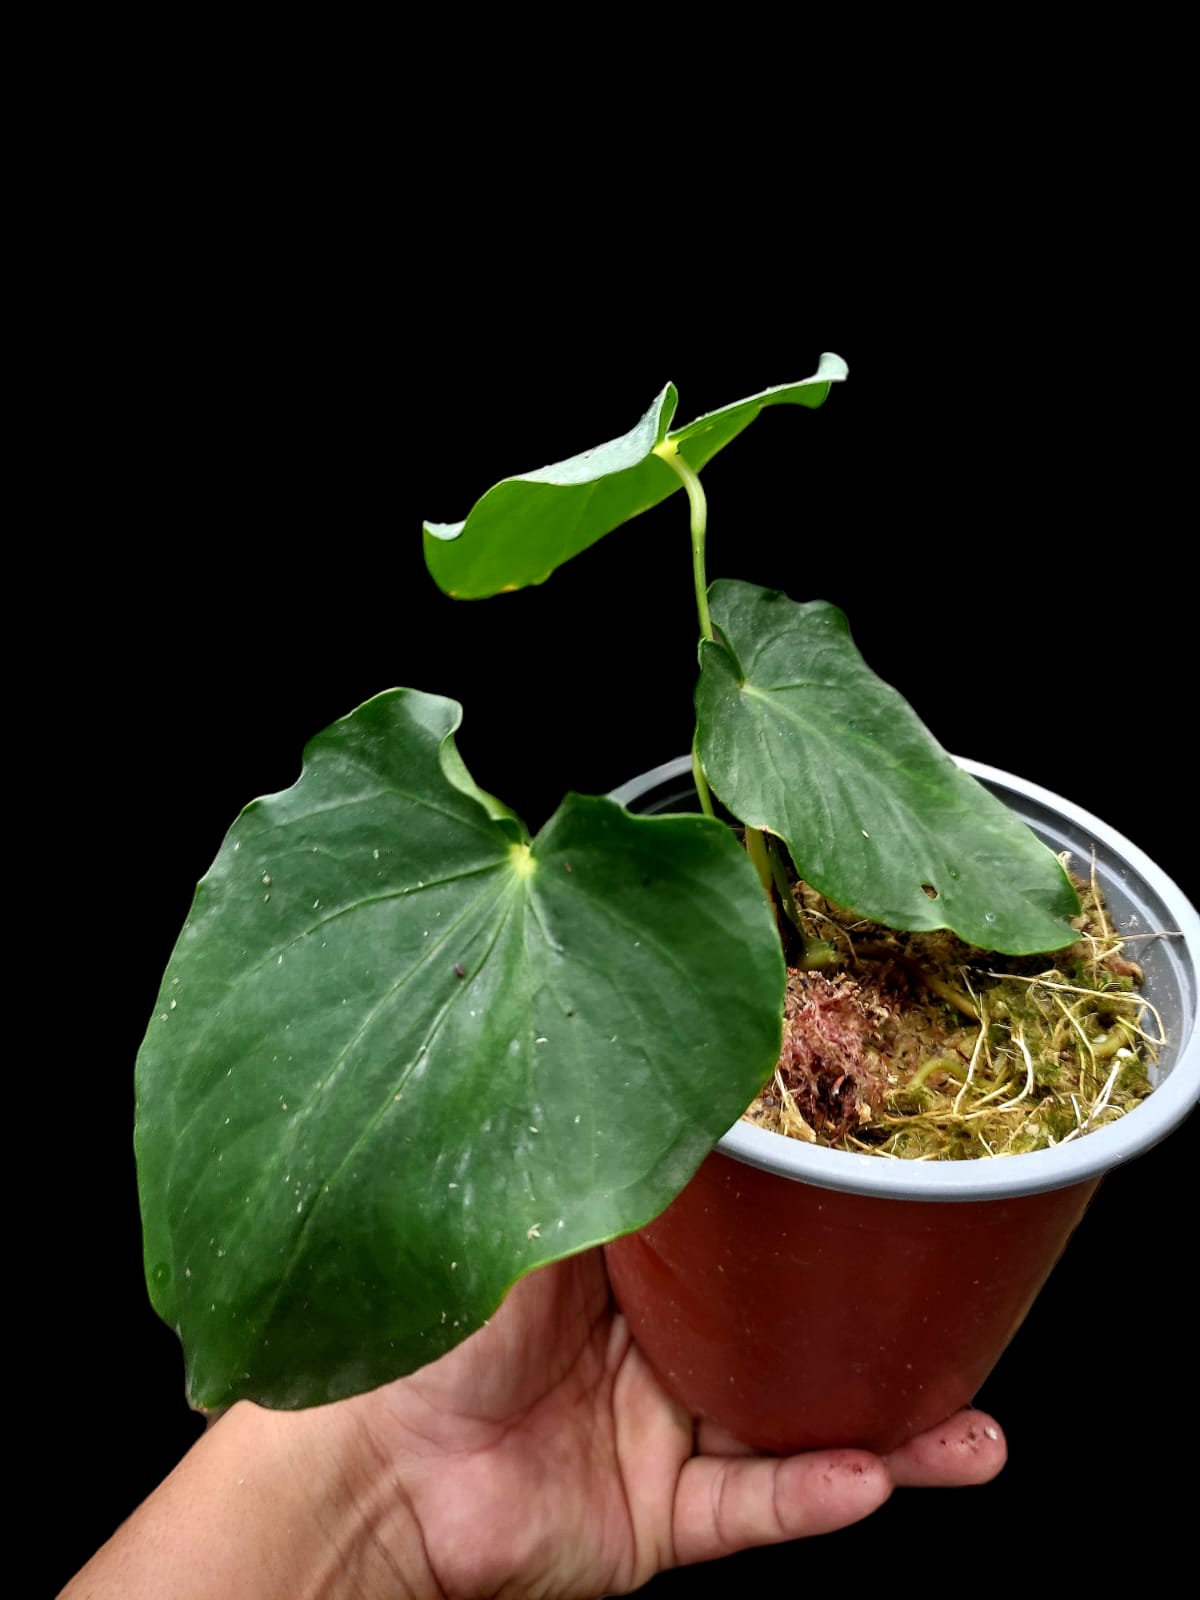 Anthurium sp. "Cumbaza" (EXACT PLANT: Shown in Last Image of Gallery)